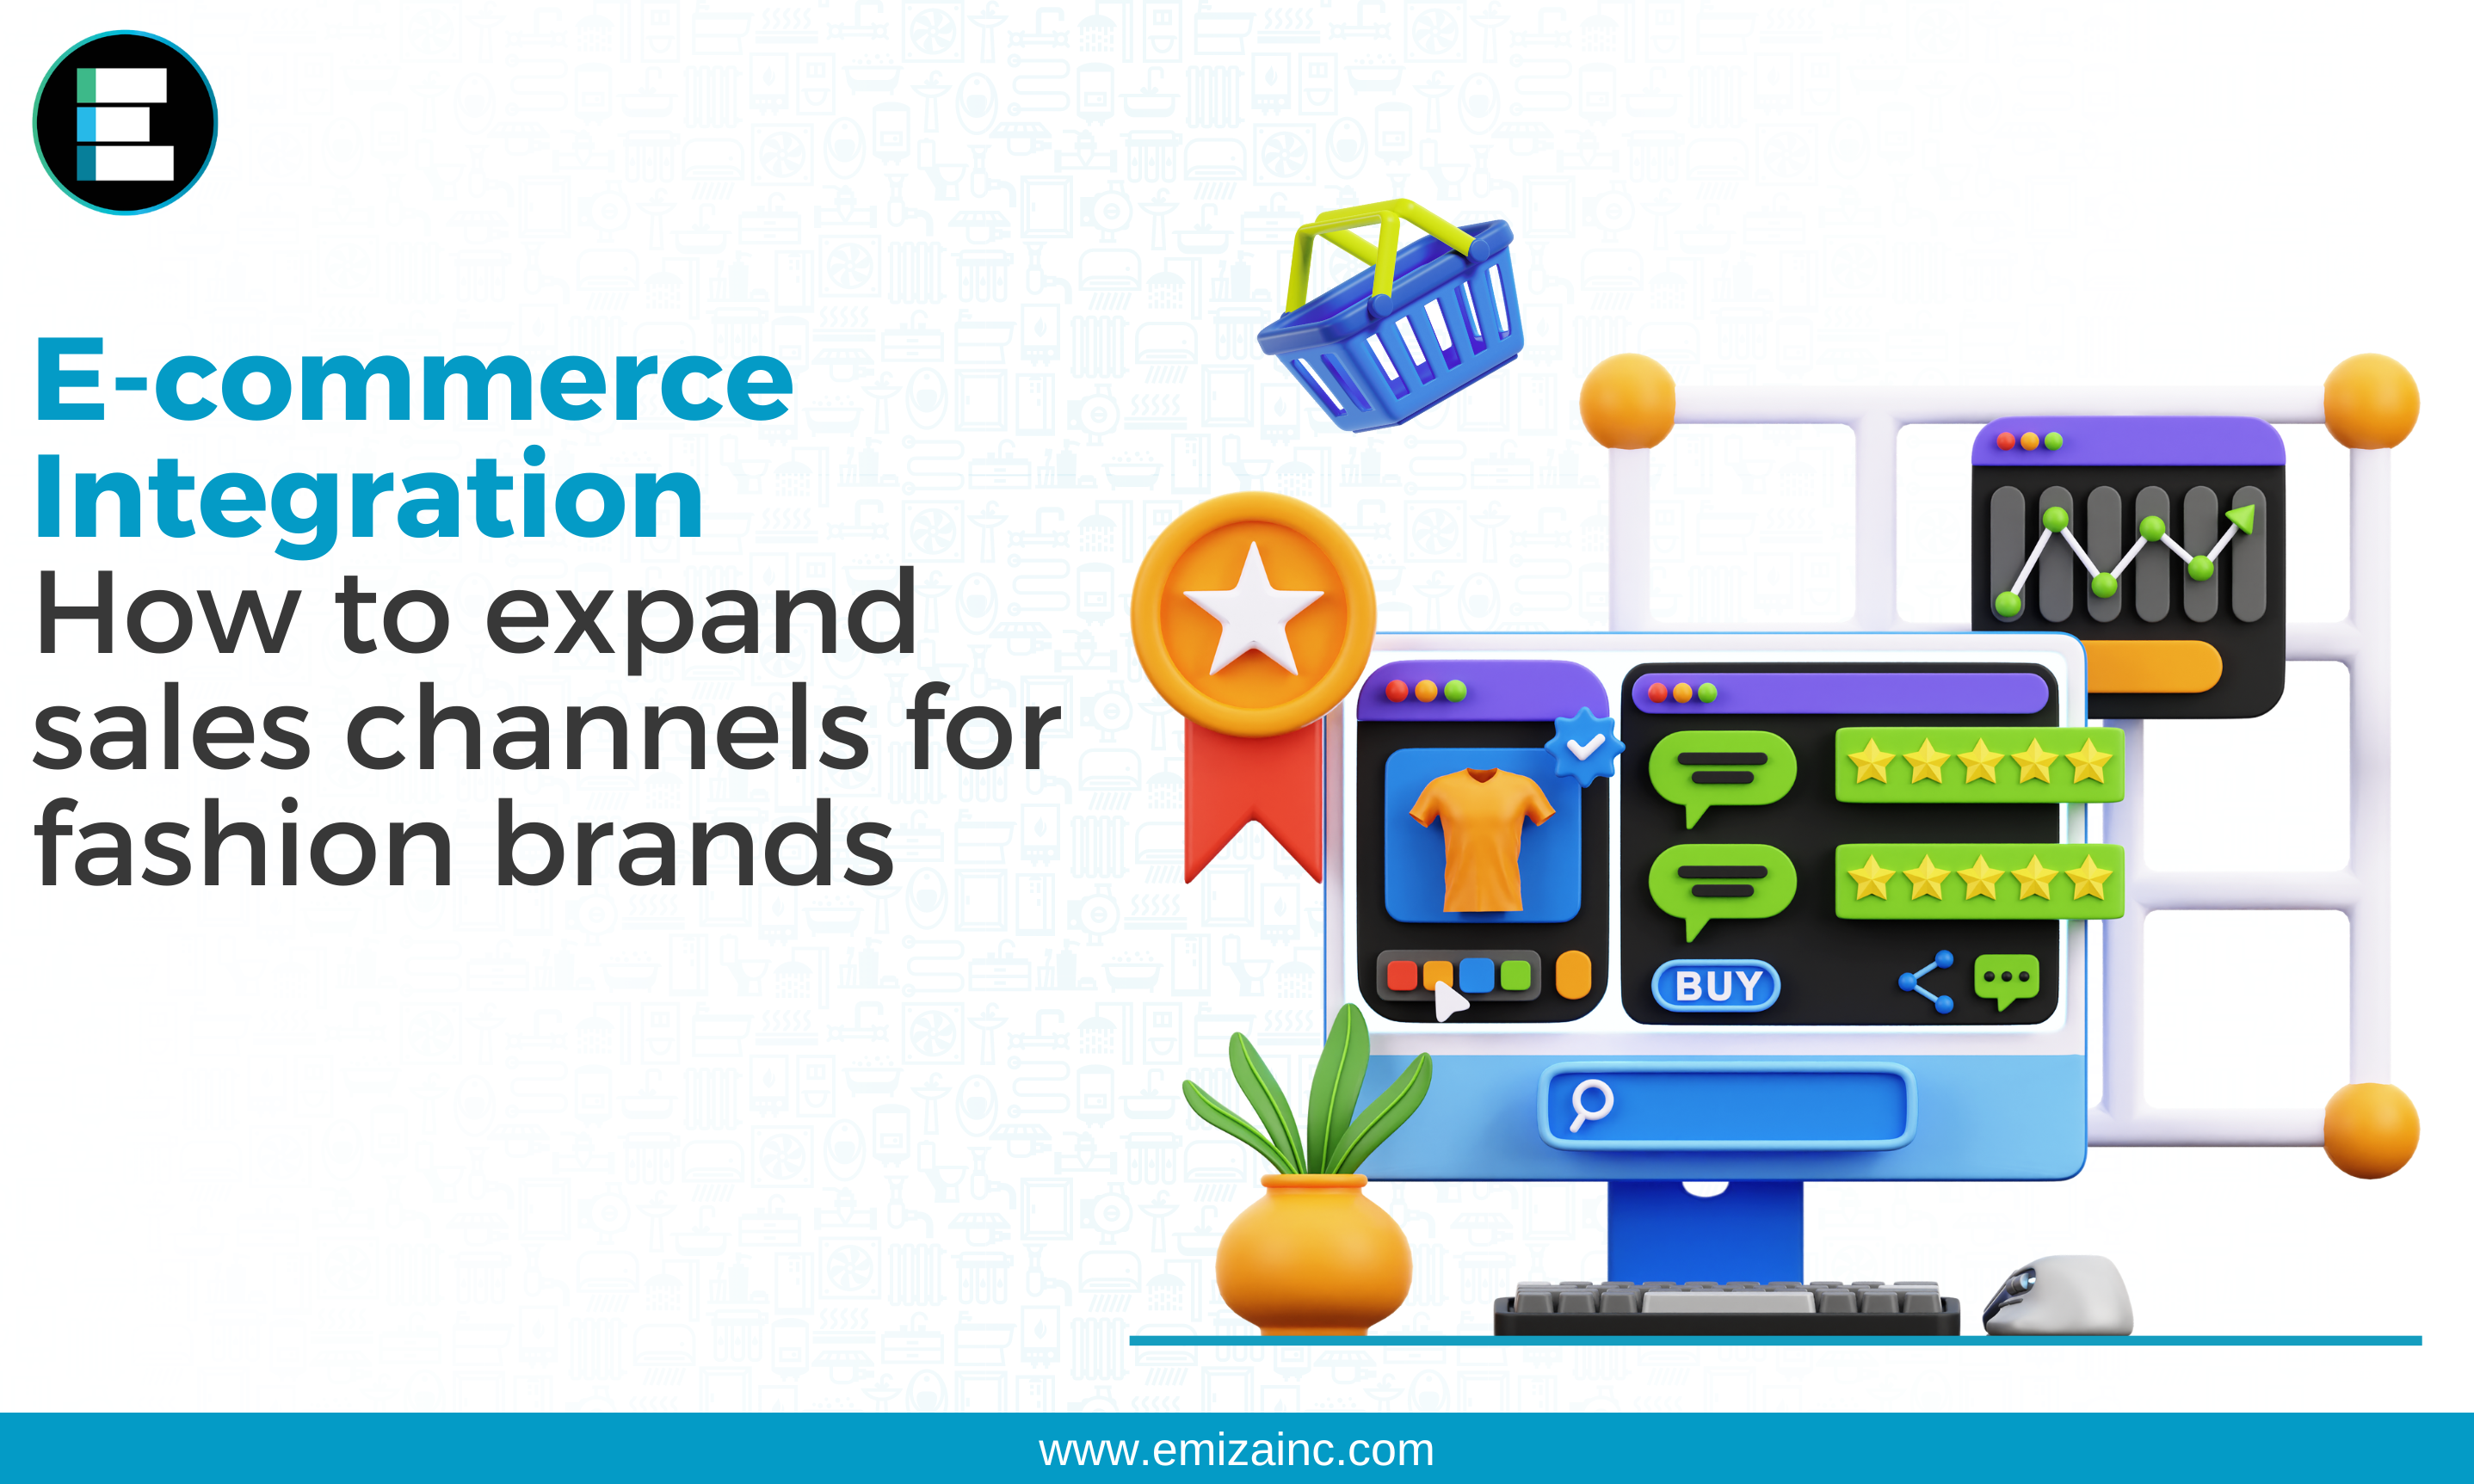 E-commerce Integration: Expanding Sales Channels for Fashion Brands